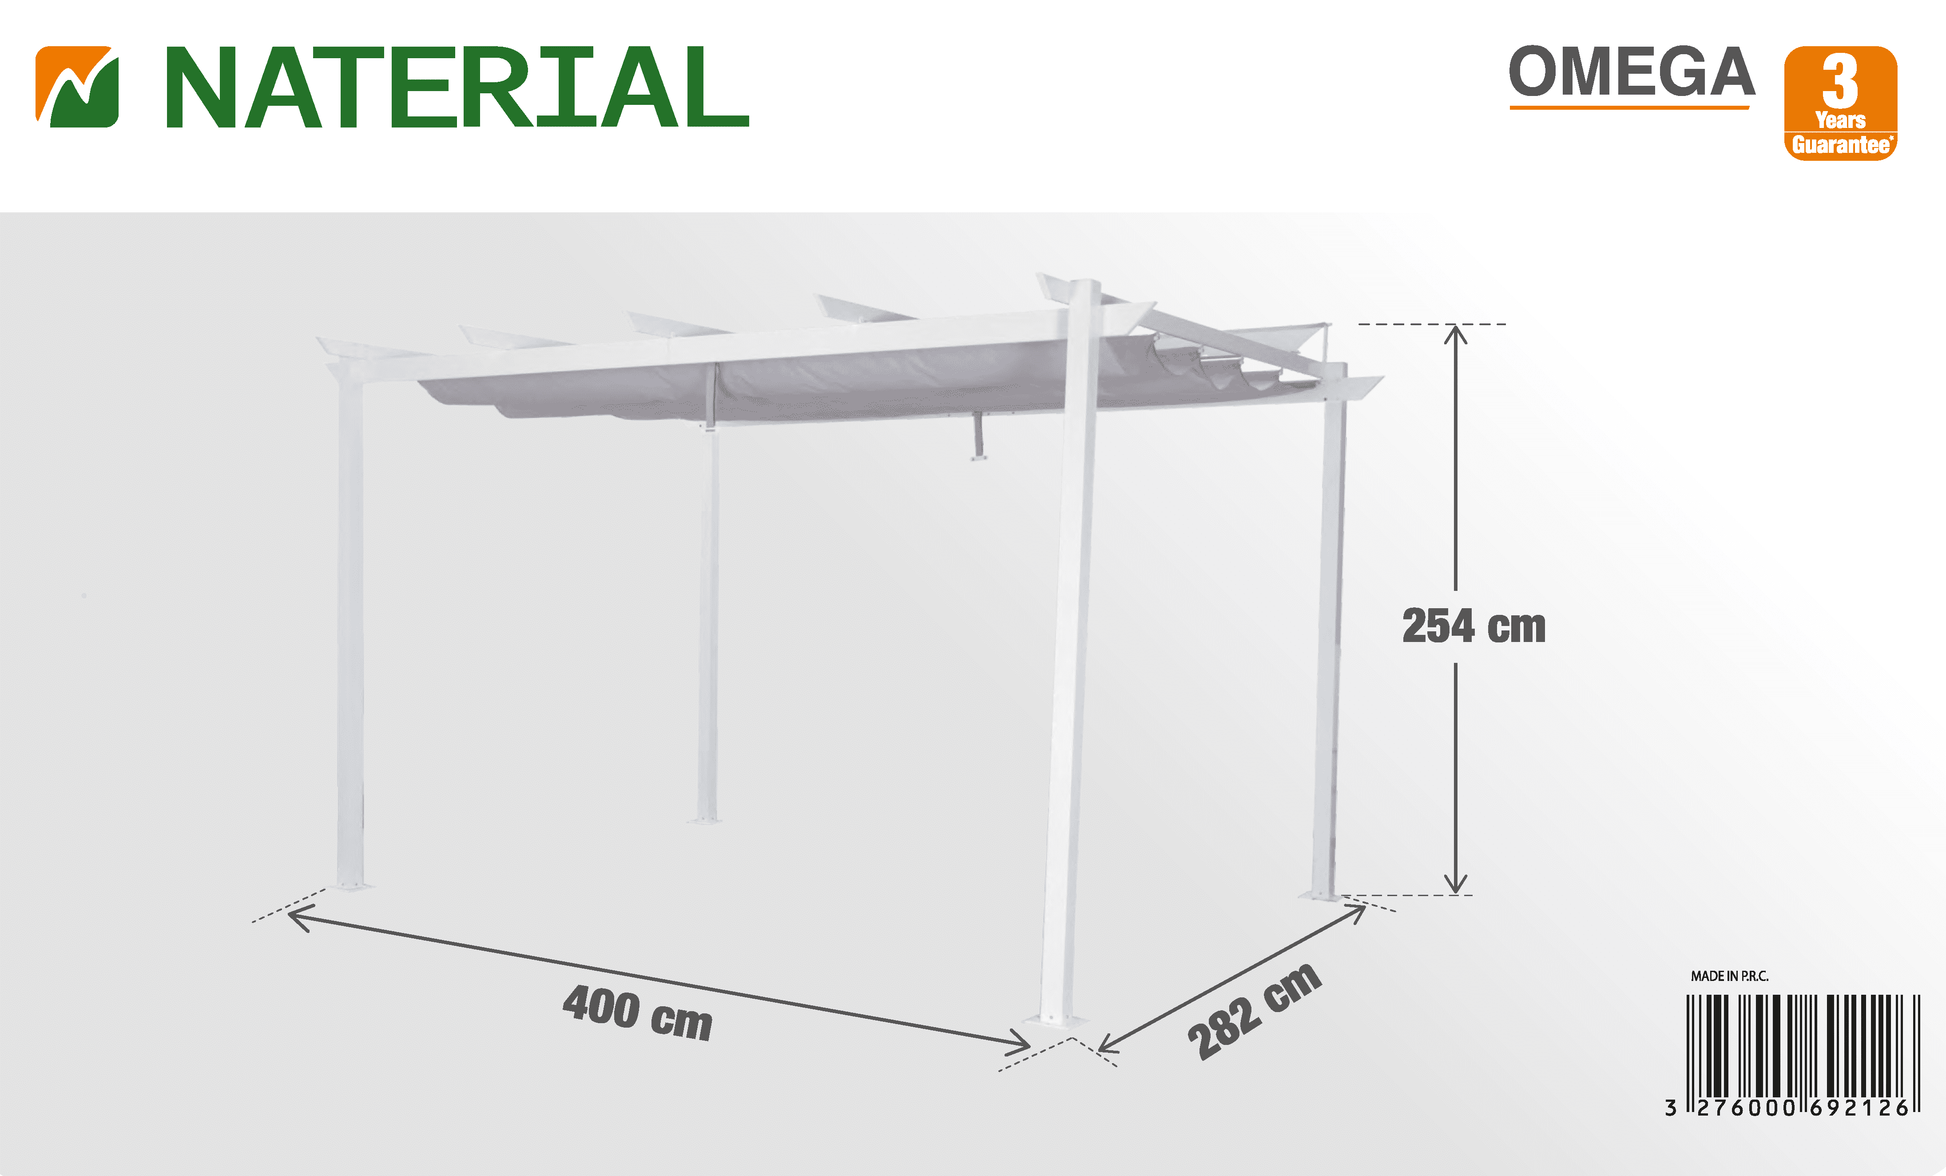 OMEGA NARIATAL - Pergola - steel anthracite polyester cover - White 2.85x4 m